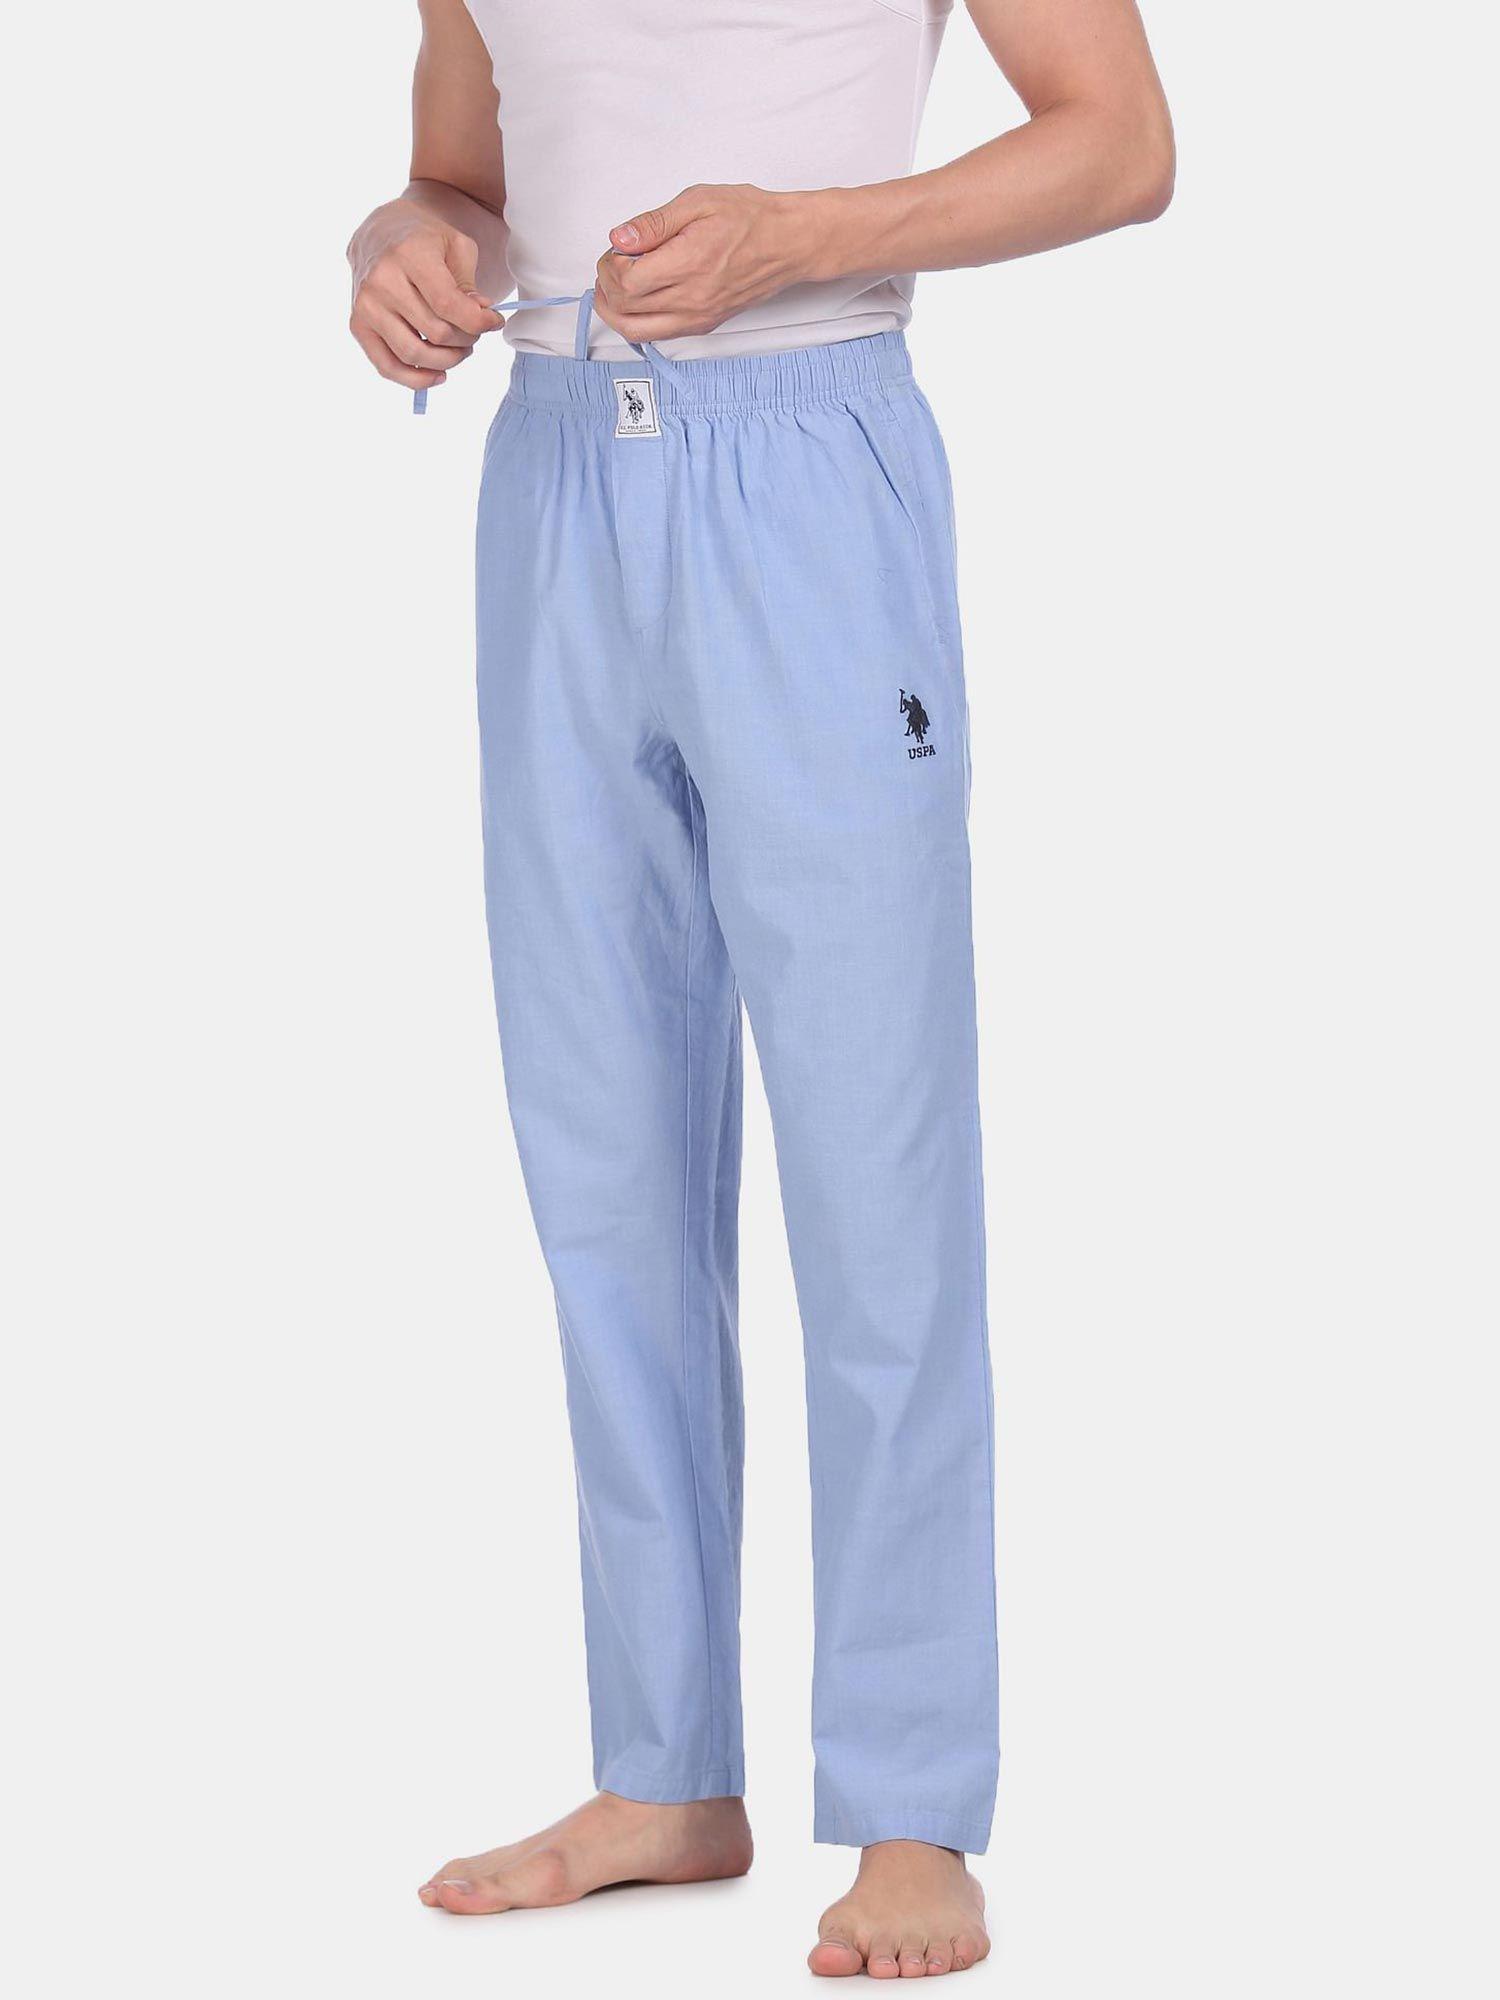 men light blue i658 comfort fit solid cotton lounge pants blue